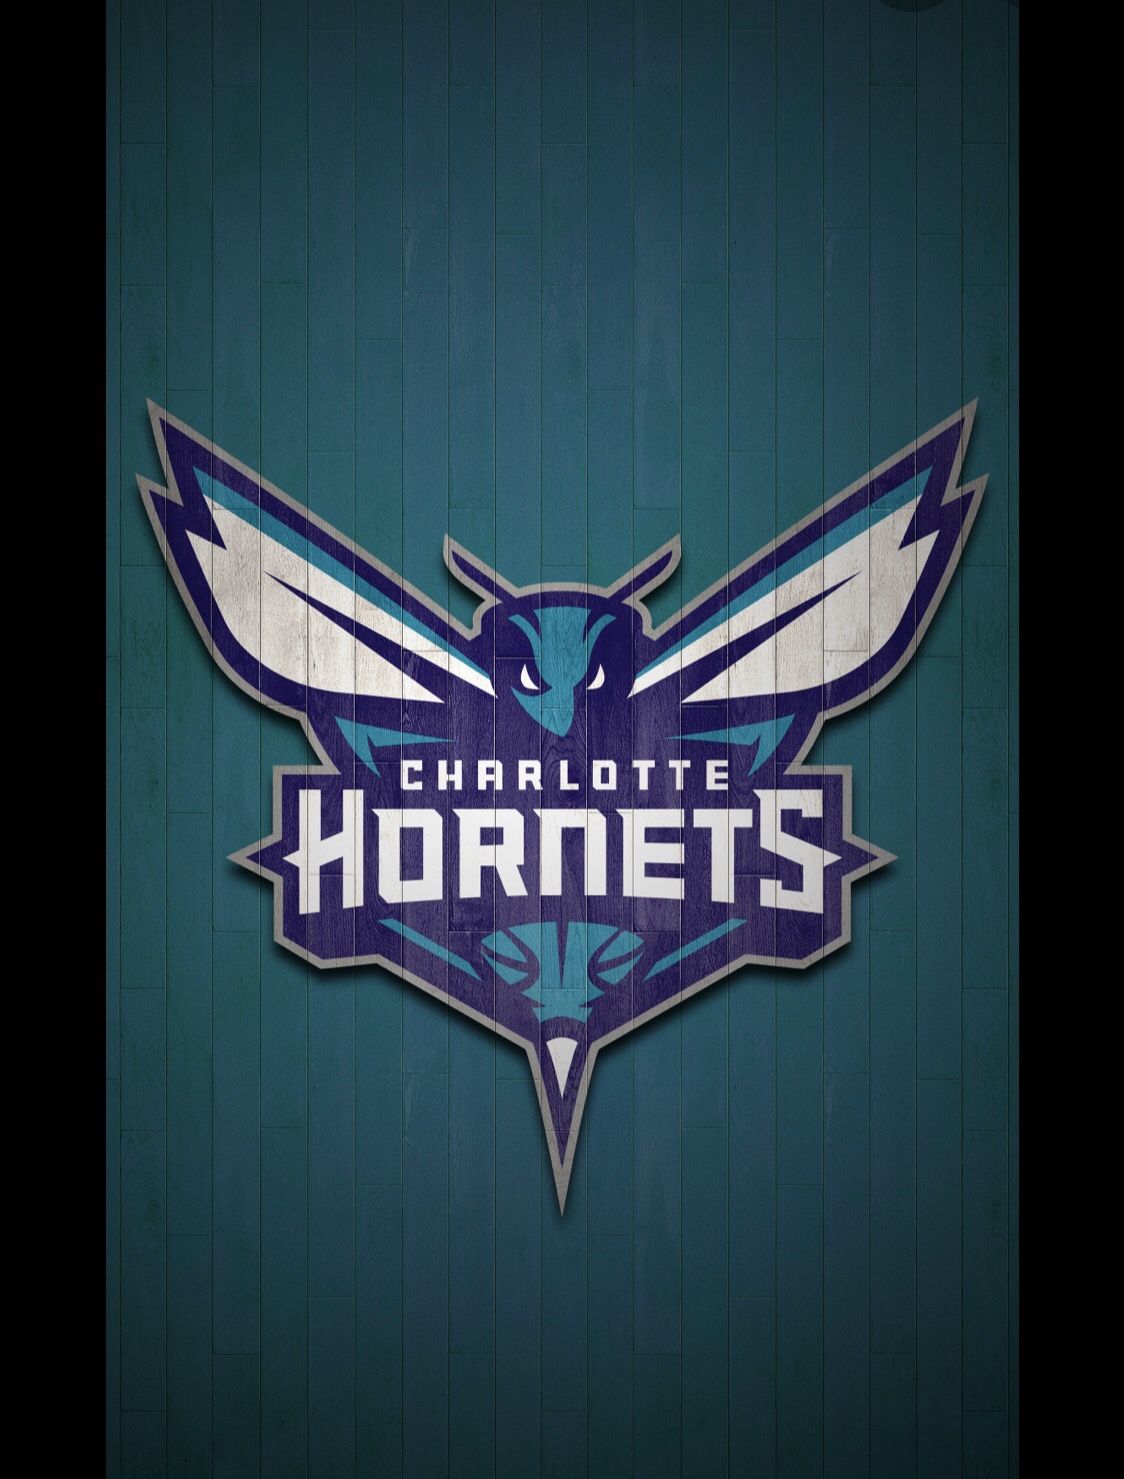 Charlotte Hornets tickets